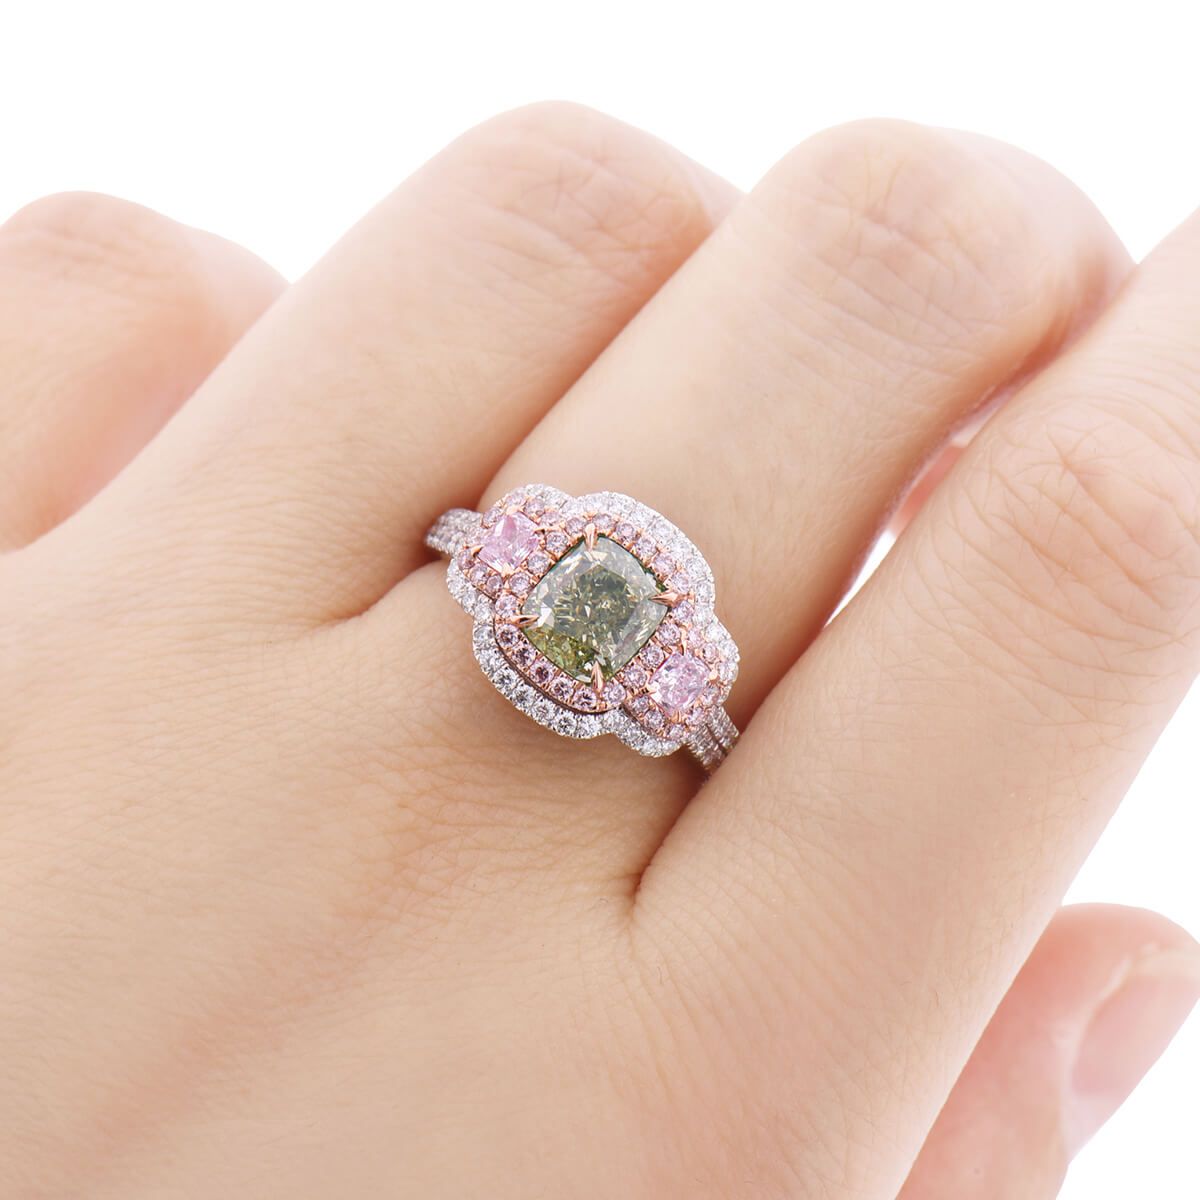 Fancy Grayish Greenish Yellow Diamond Ring, 2.00 Ct. (3.08 Ct. TW), Cushion shape, GIA Certified, 6173167888